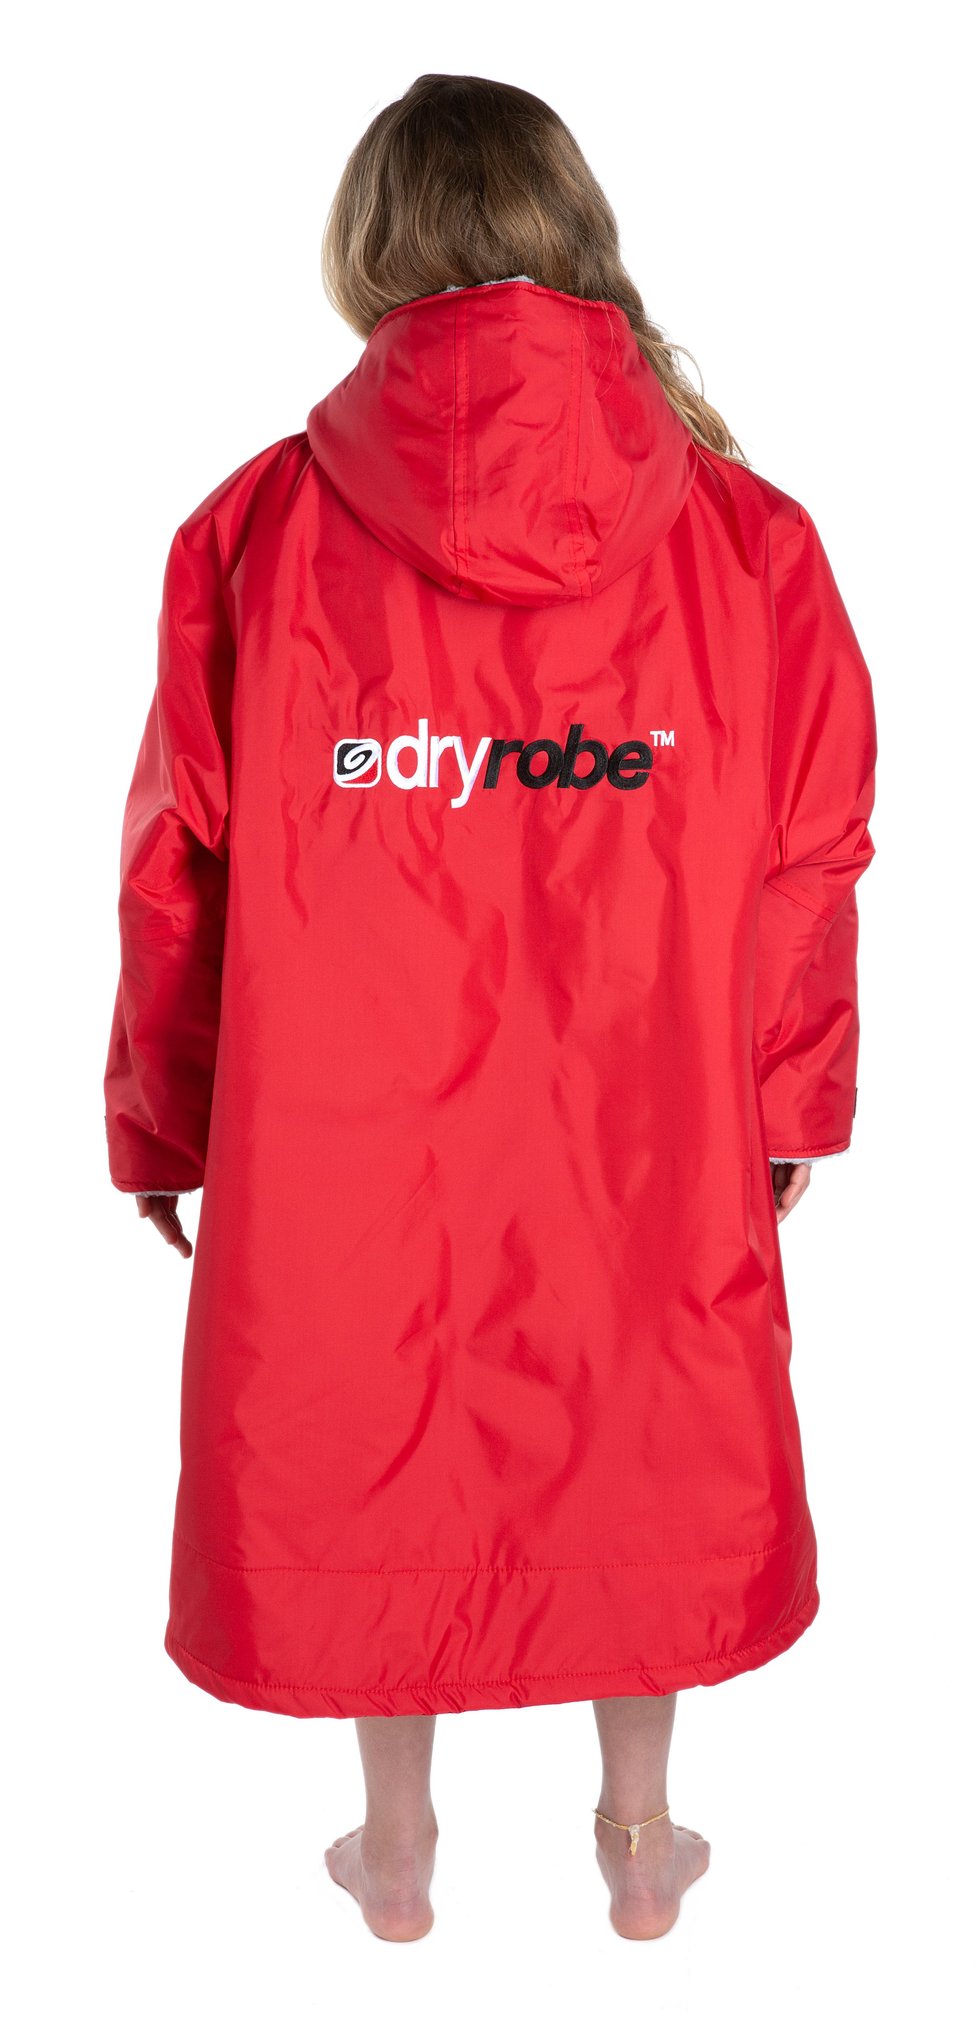 Kids Dryrobe Long Sleeve Changing Robe - Red/ Grey